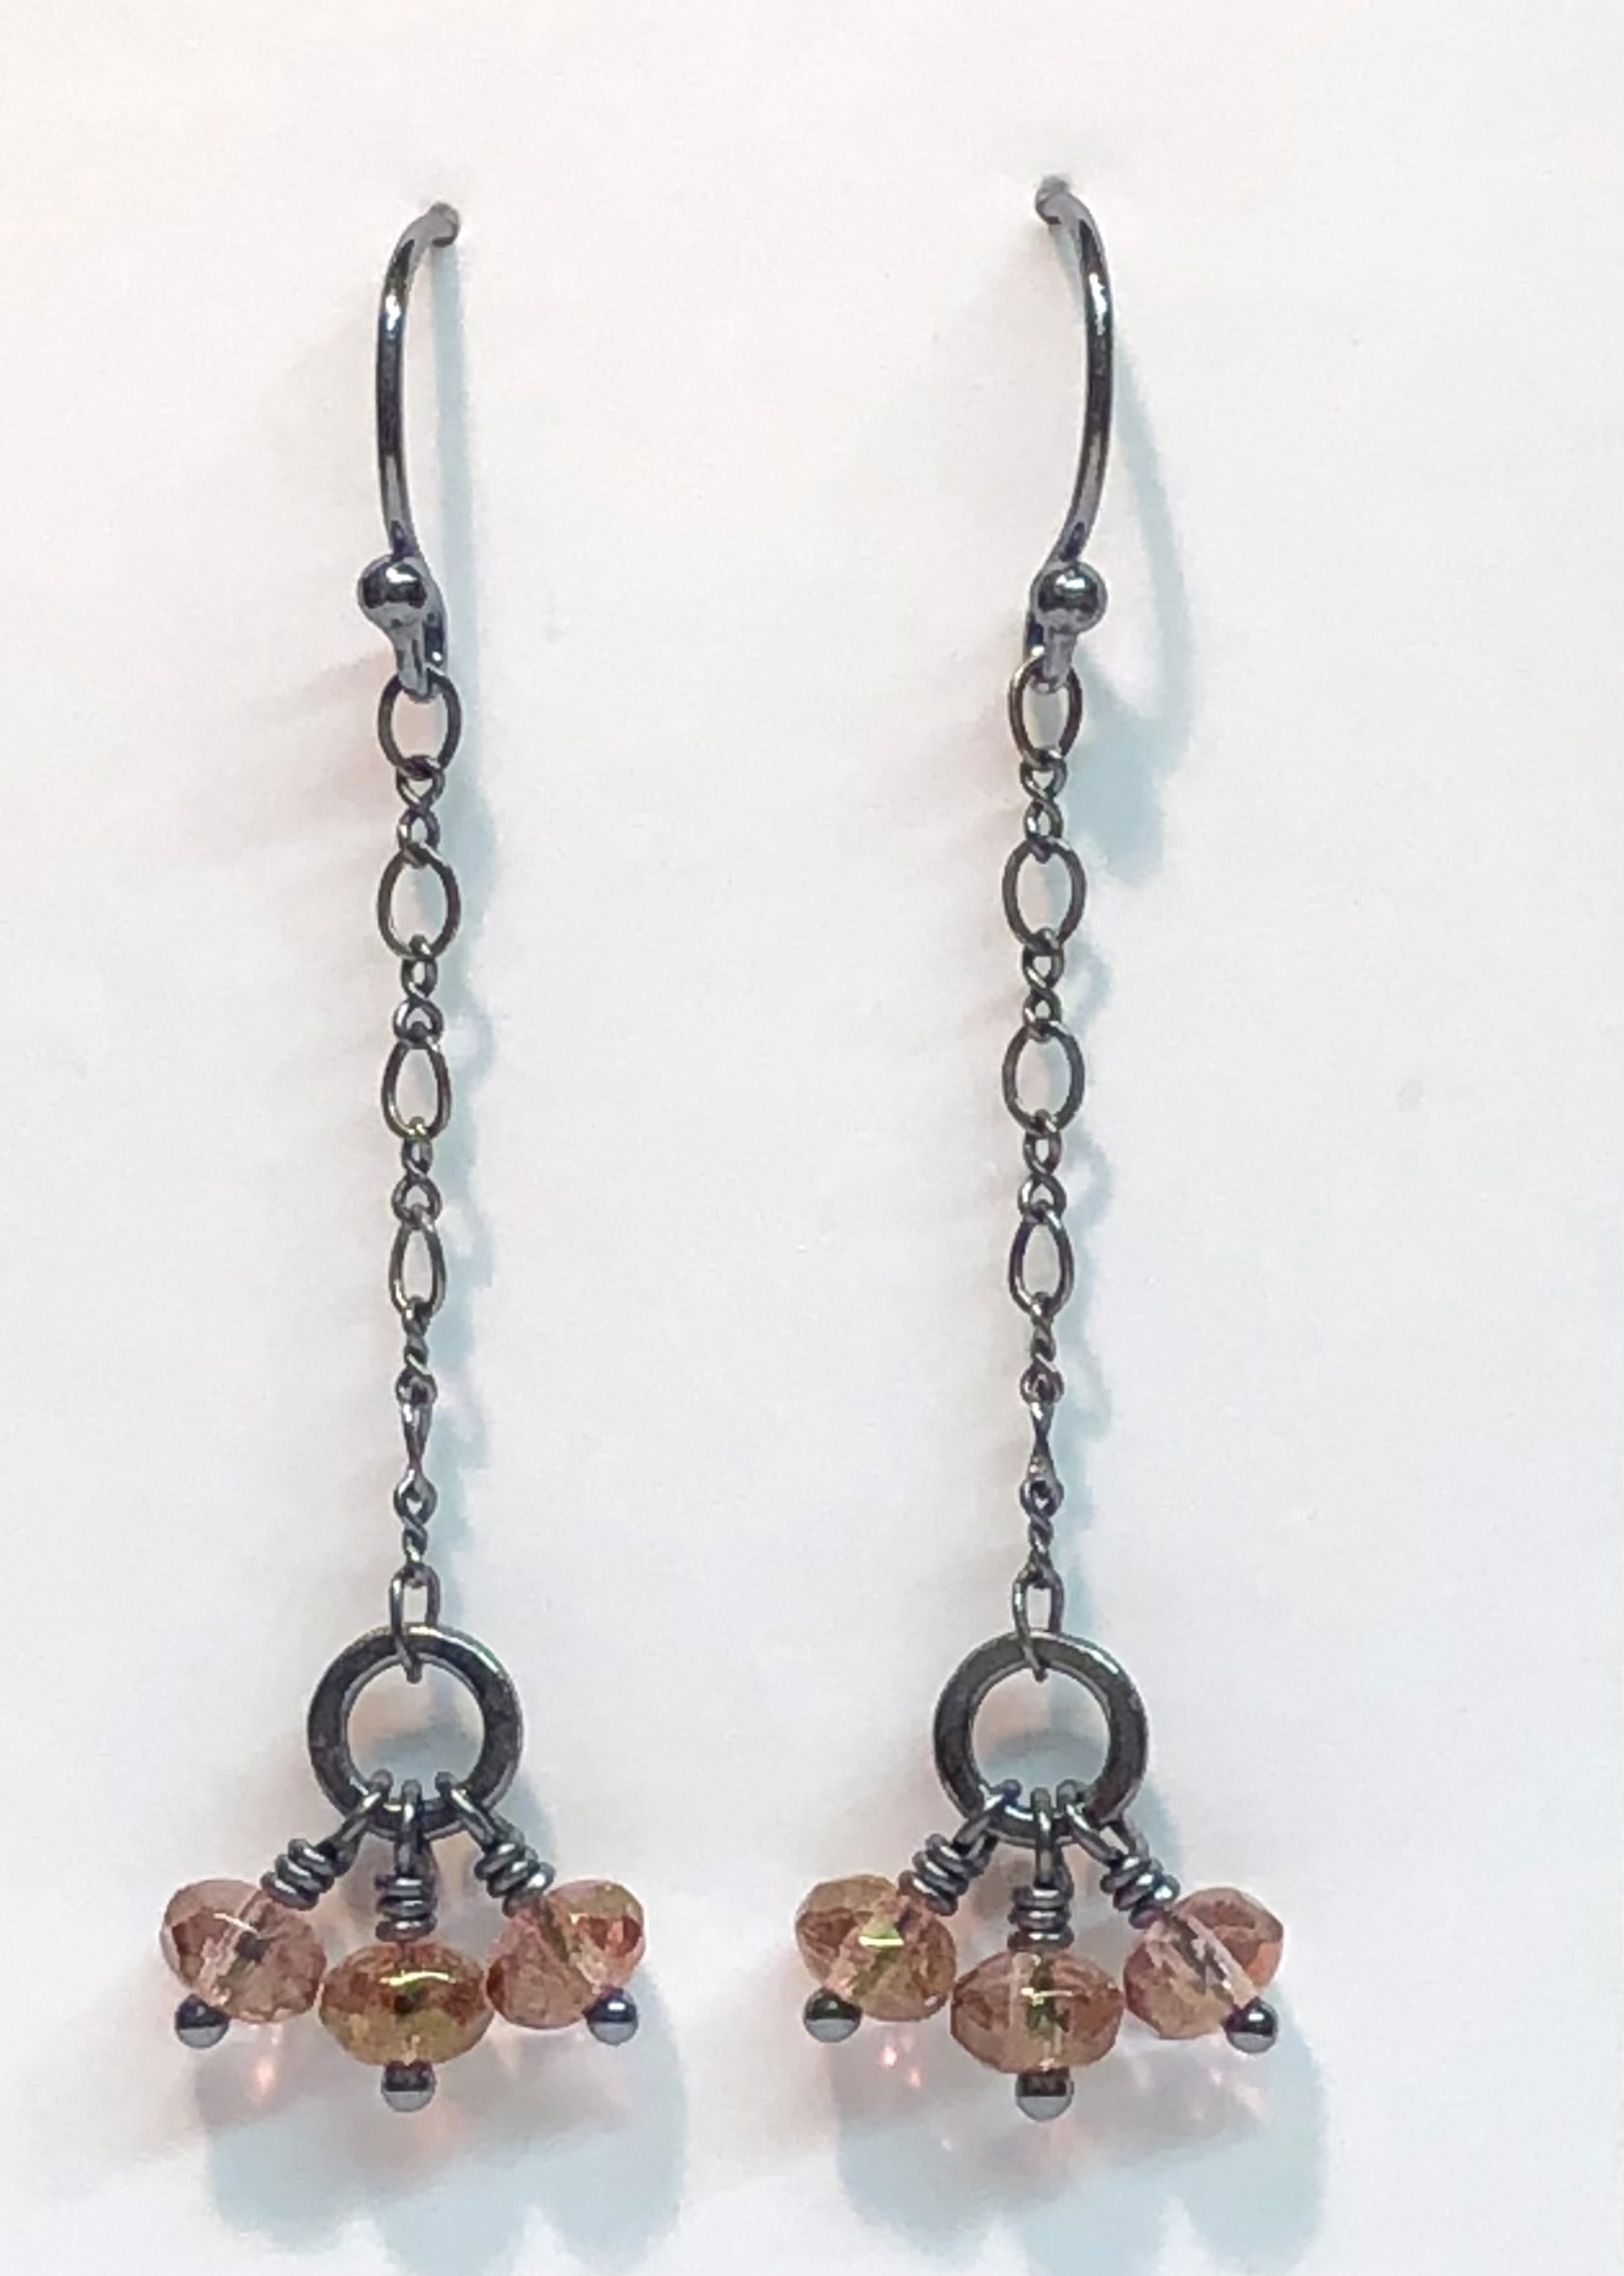 Pink Czech w/Long Chain Sm. Ring Earrings, Oxidized Sterling Silver by Amelia Whelan